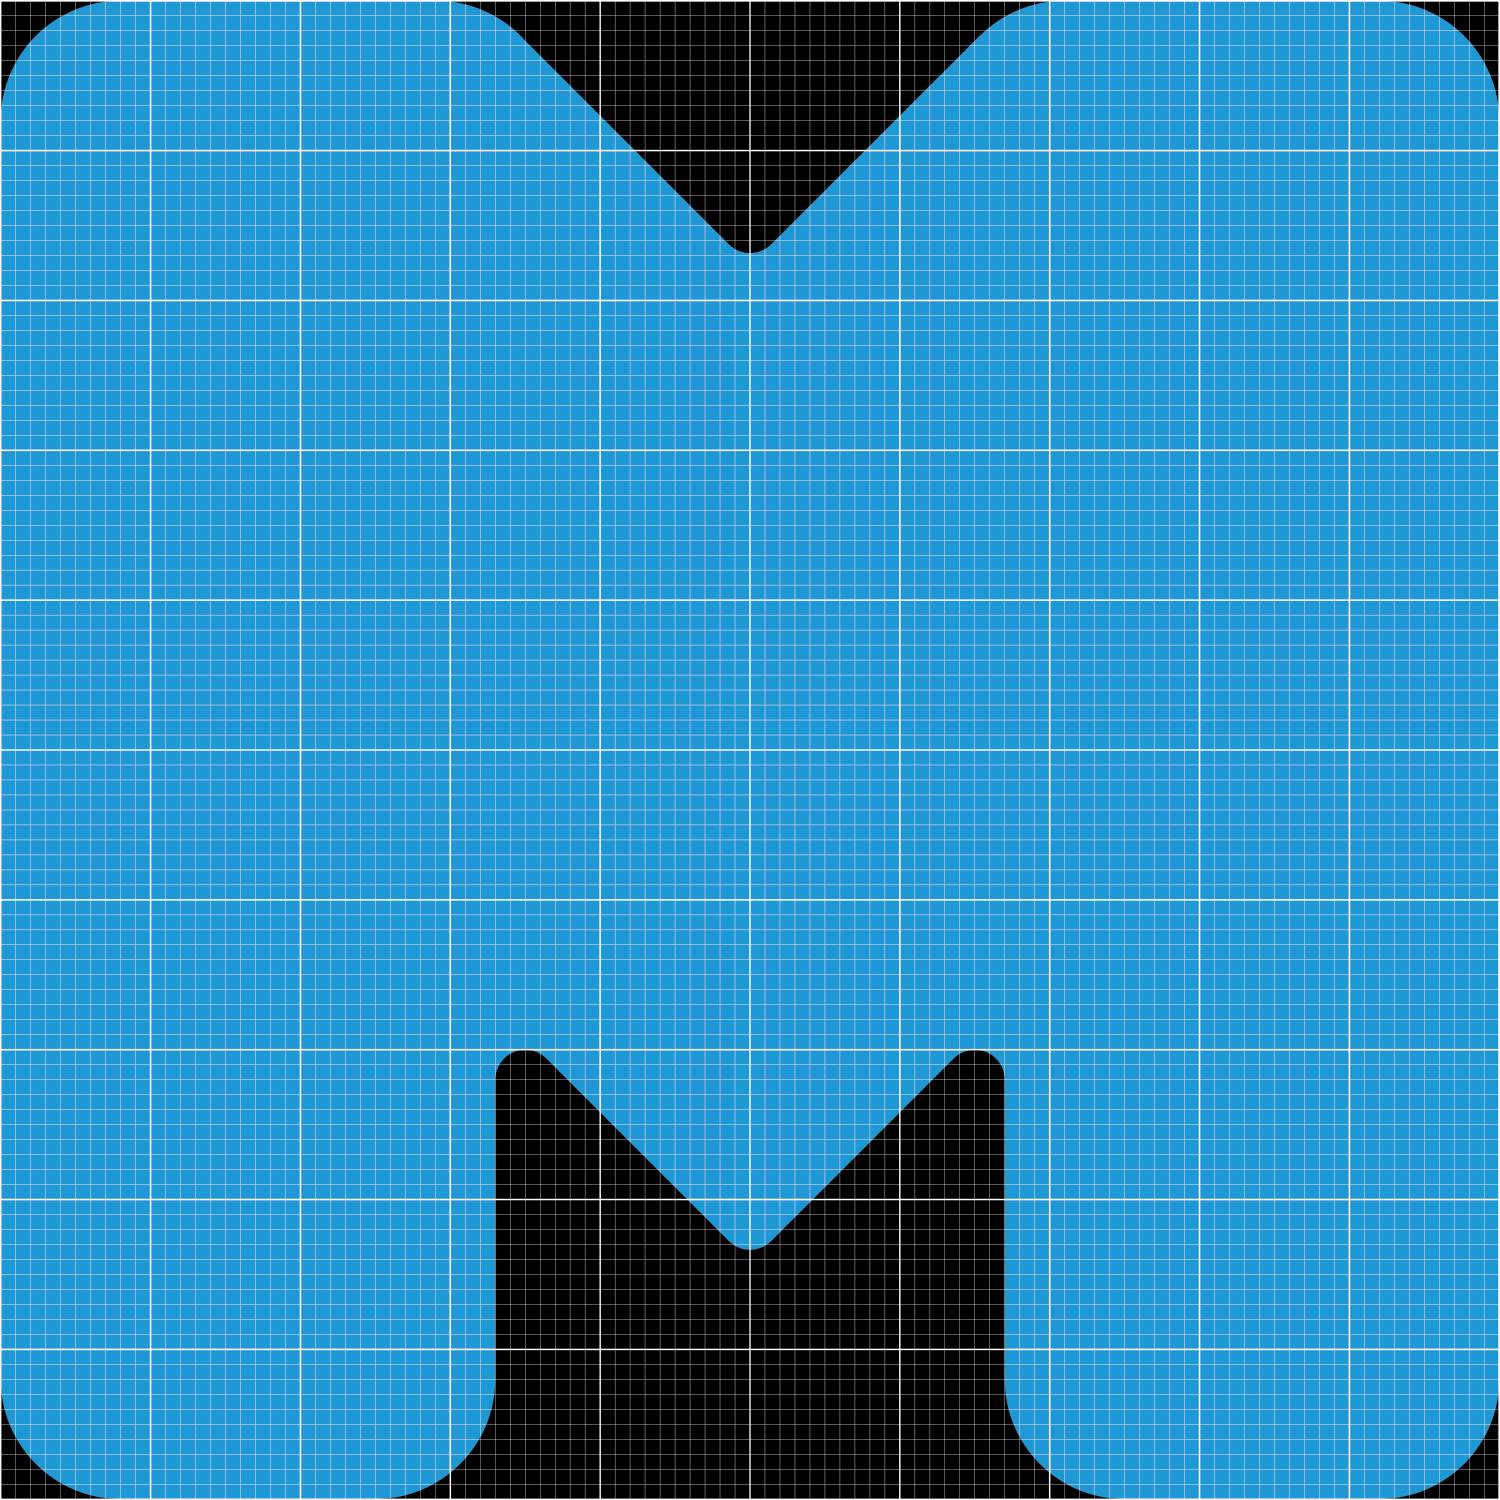 Disney Mix Logo, Typography, Matthijs Matt van Leeuwen, Kurt Munger, Justin Ross Tolentino, Interbrand